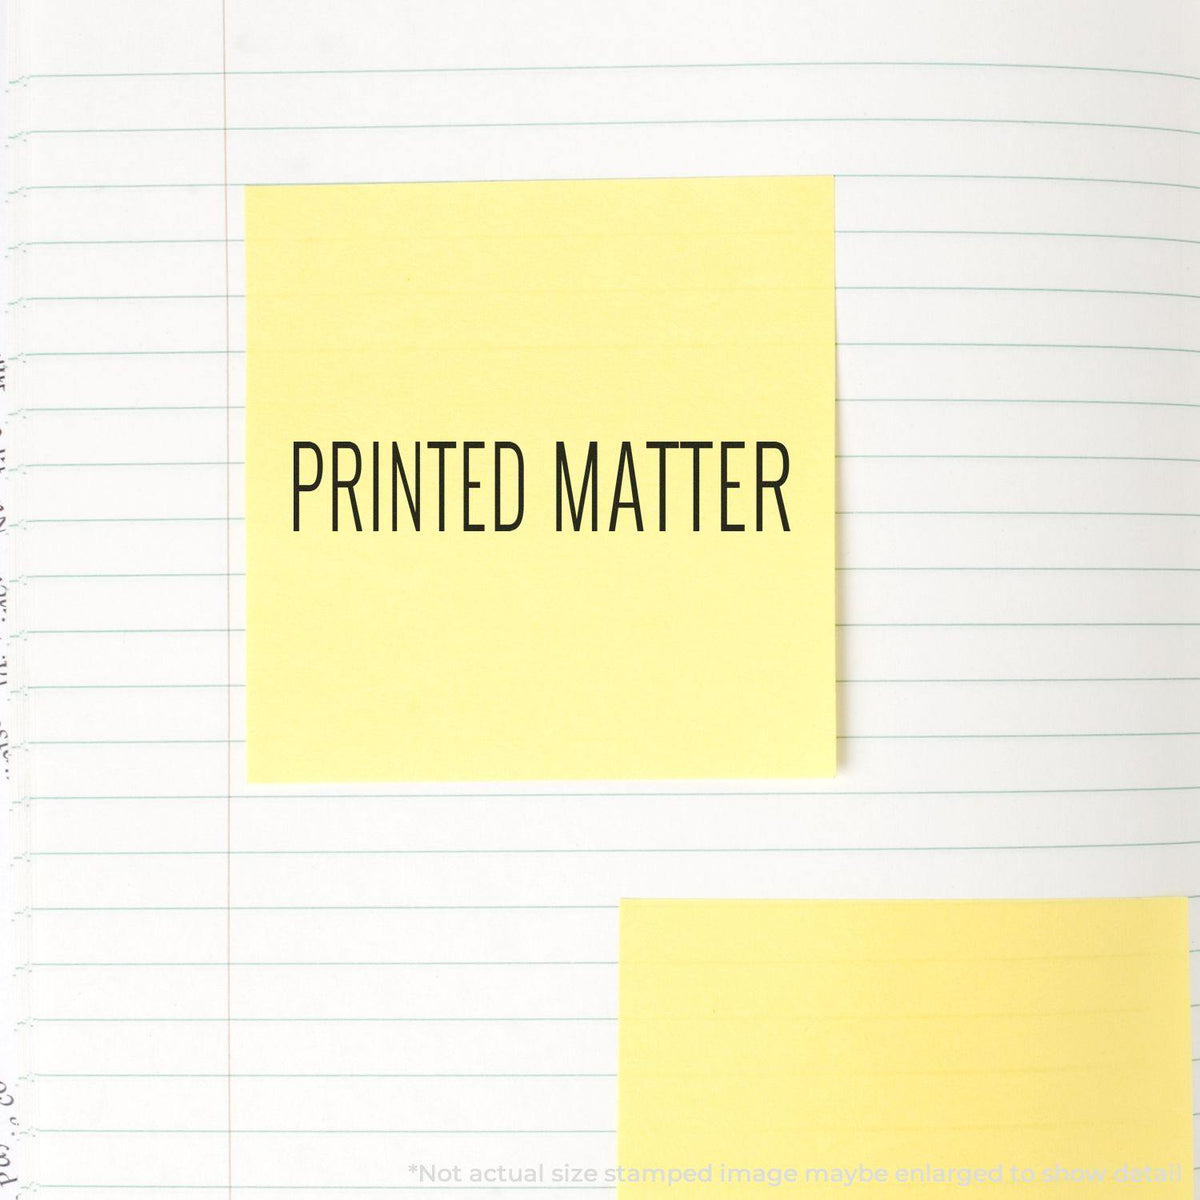 In Use Slim Pre-Inked Printed Matter Stamp Image